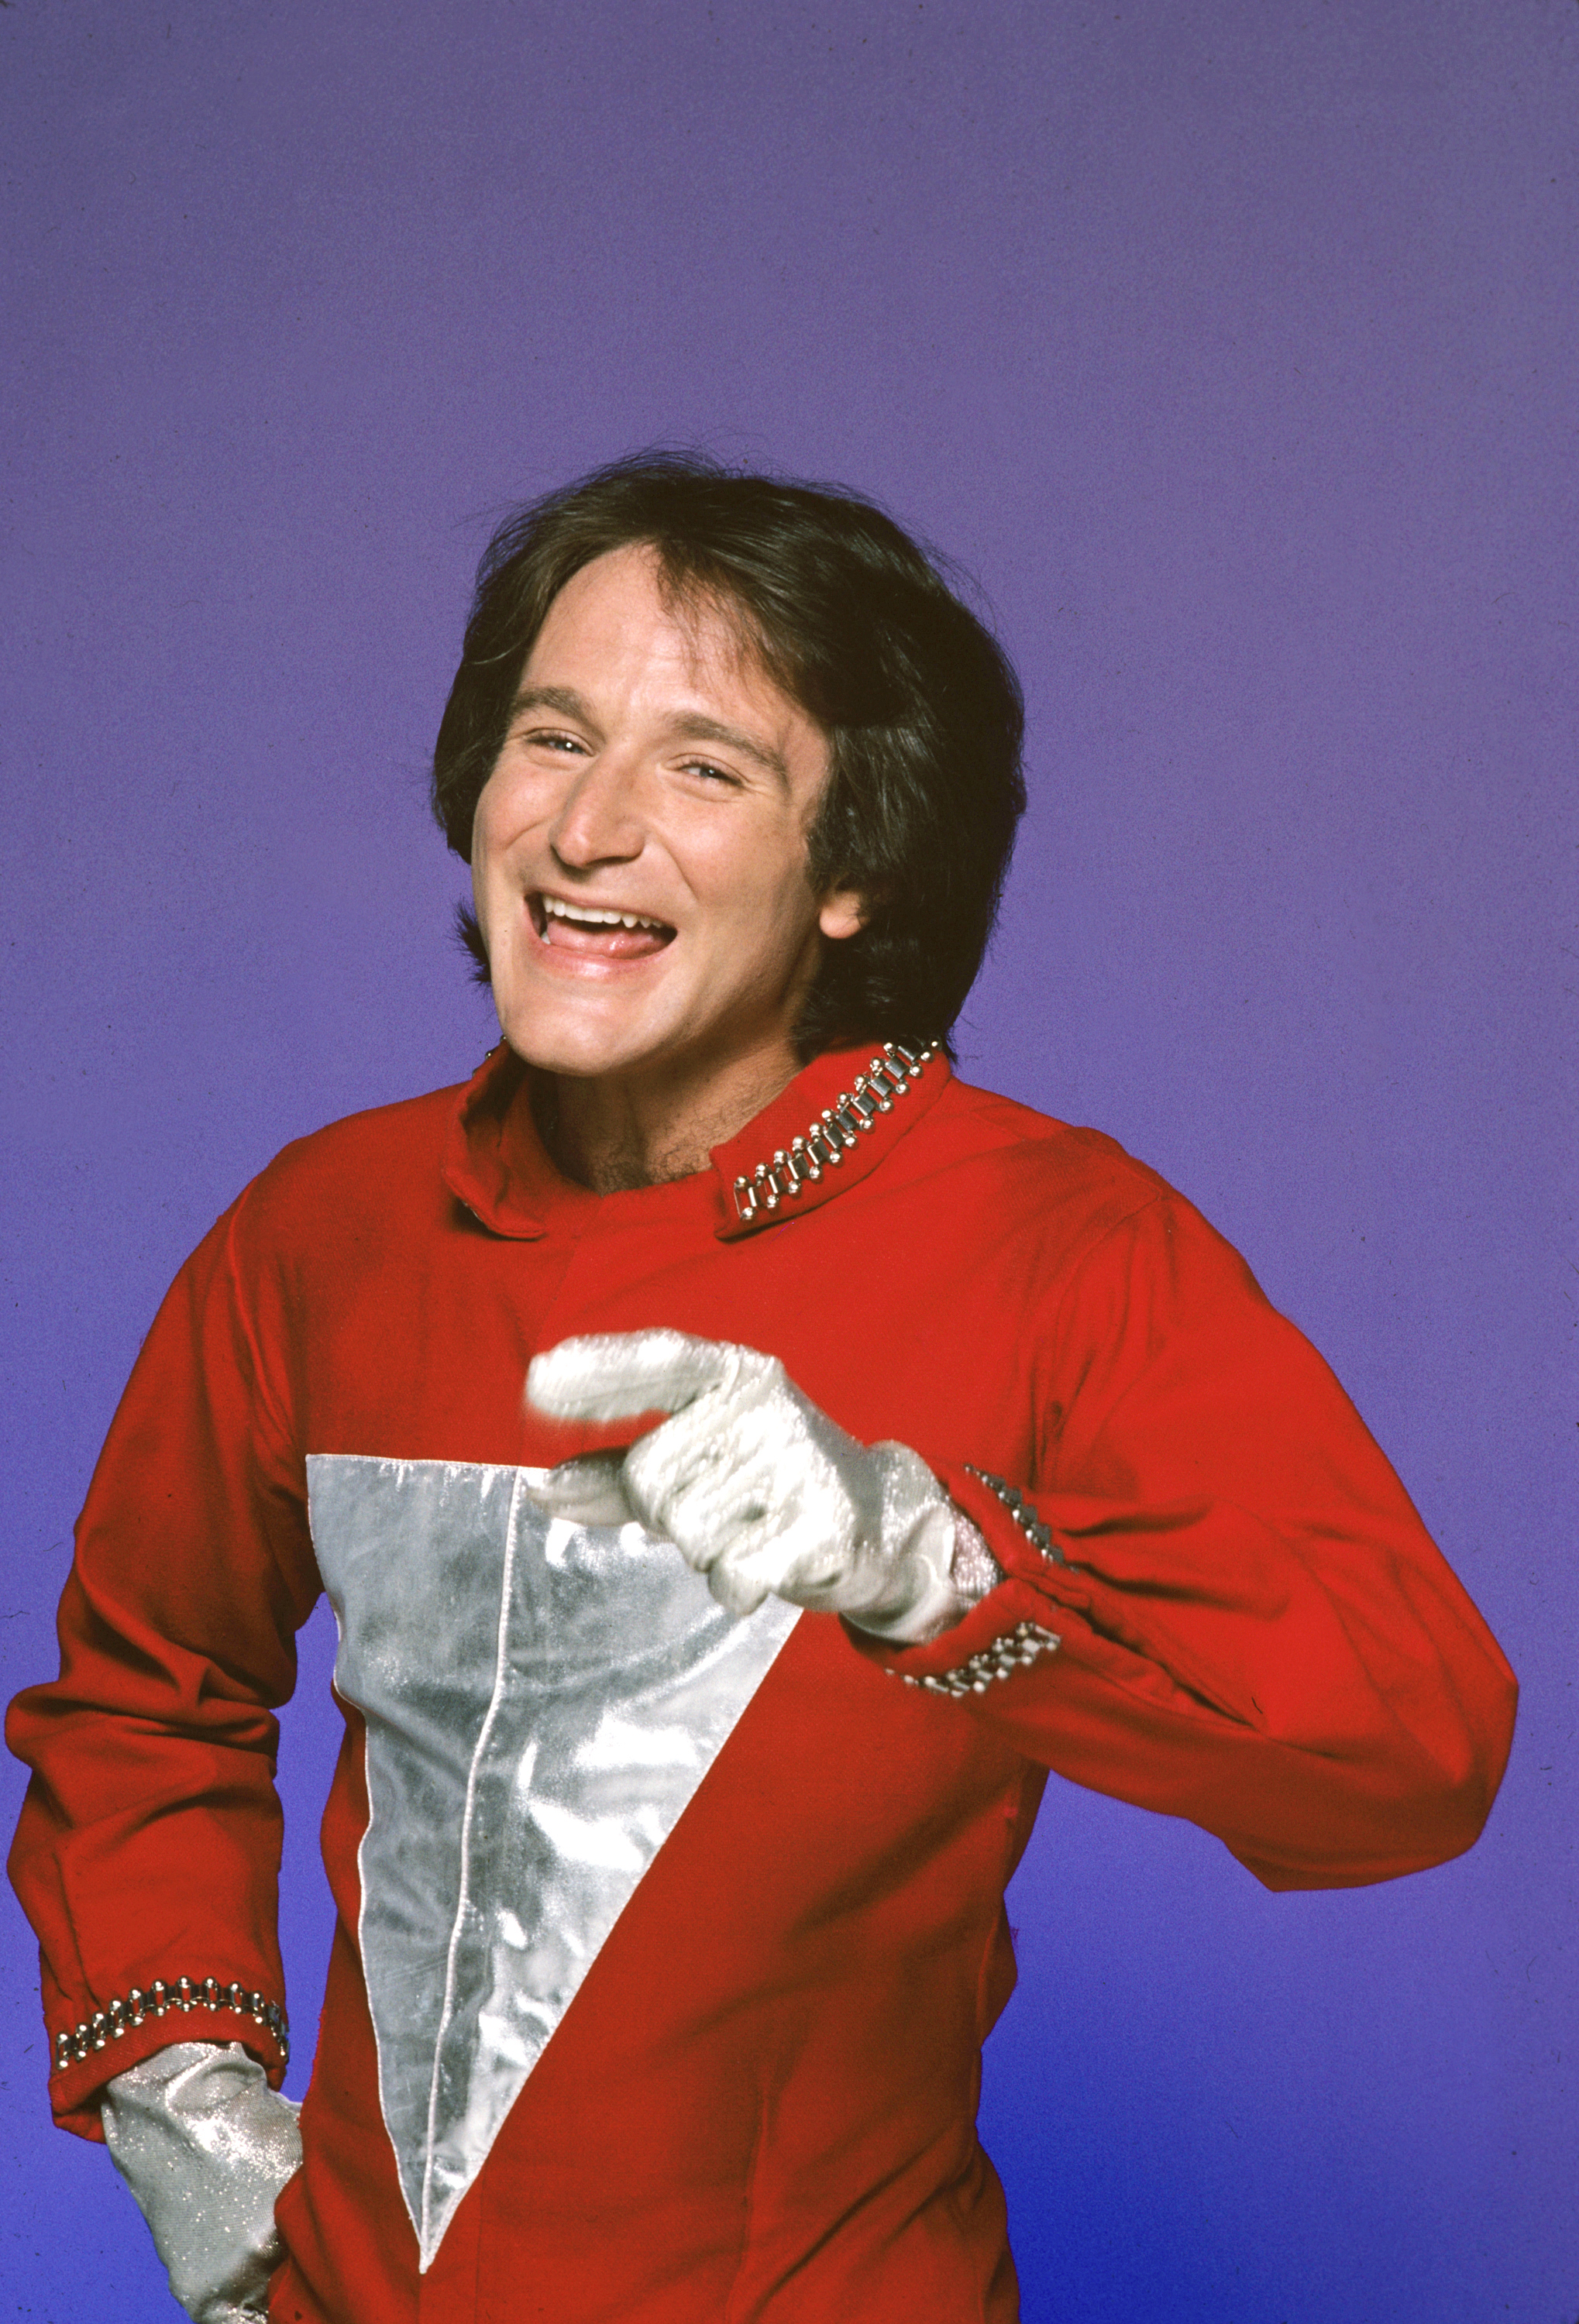 Robin Williams en "Mork y Mindy" en 1978 | Foto: Getty Images